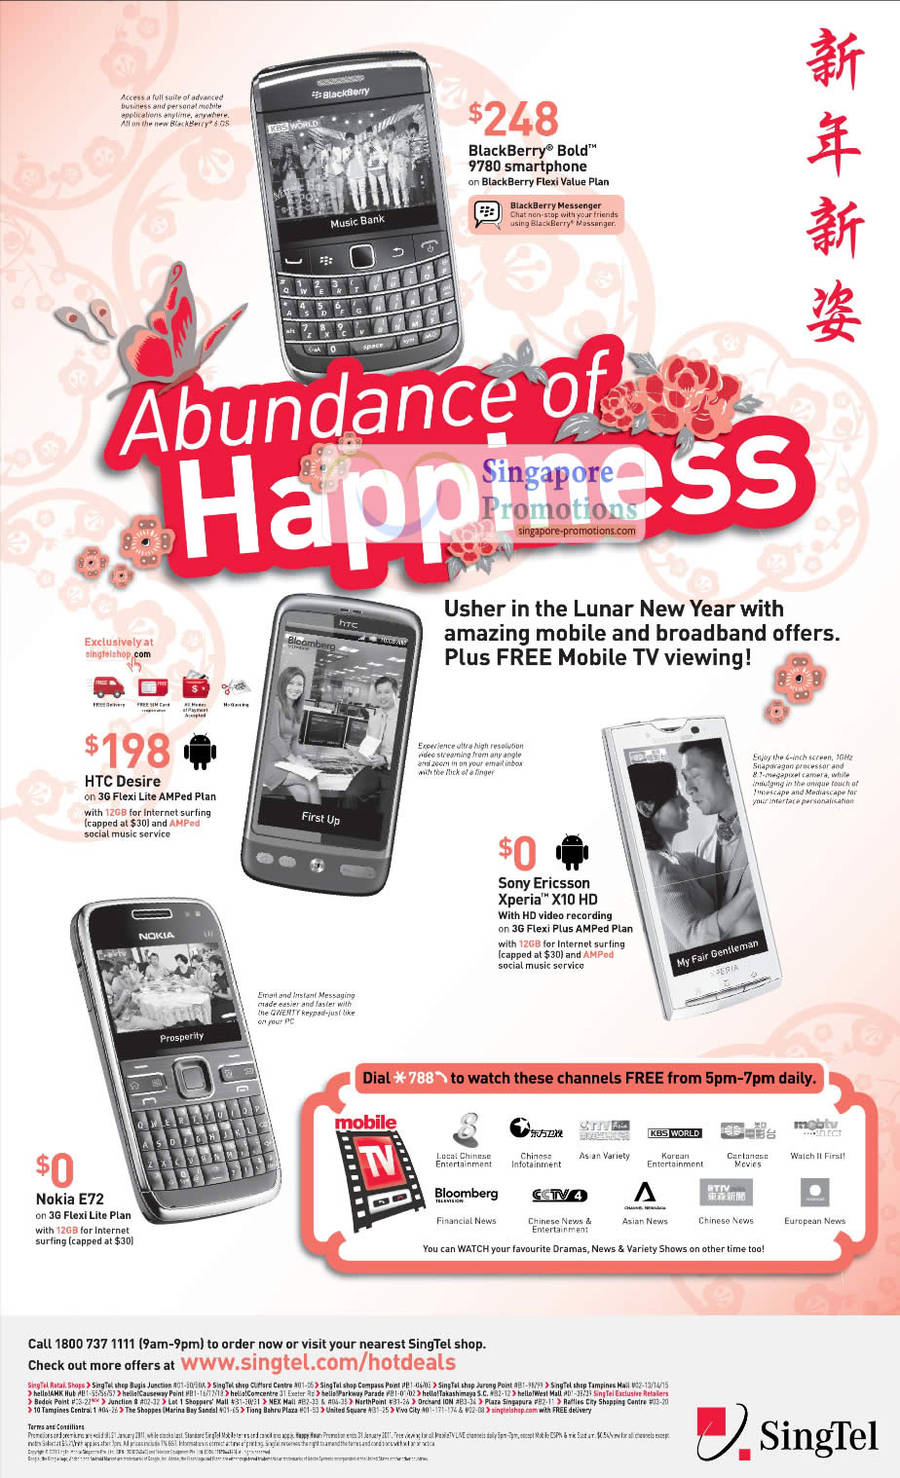 Blackberry Bold 9780, HTC Desire, Sony Ericsson Xperia X10 HD, Nokia E72